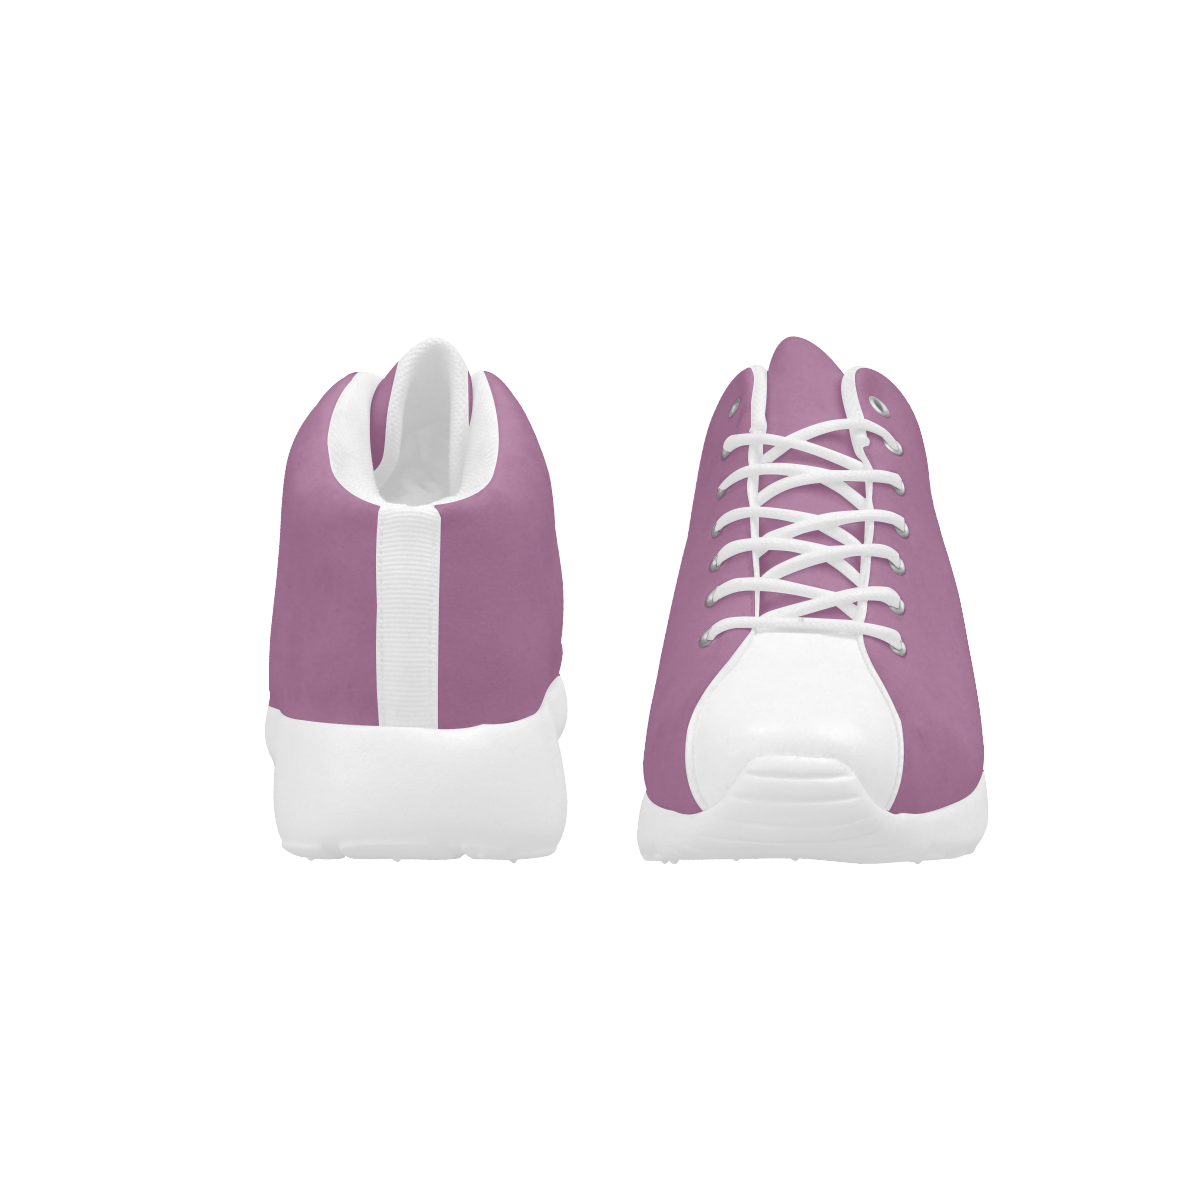 Plum Pretty Women's Basketball Training Shoes/Large Size (Model 47502)